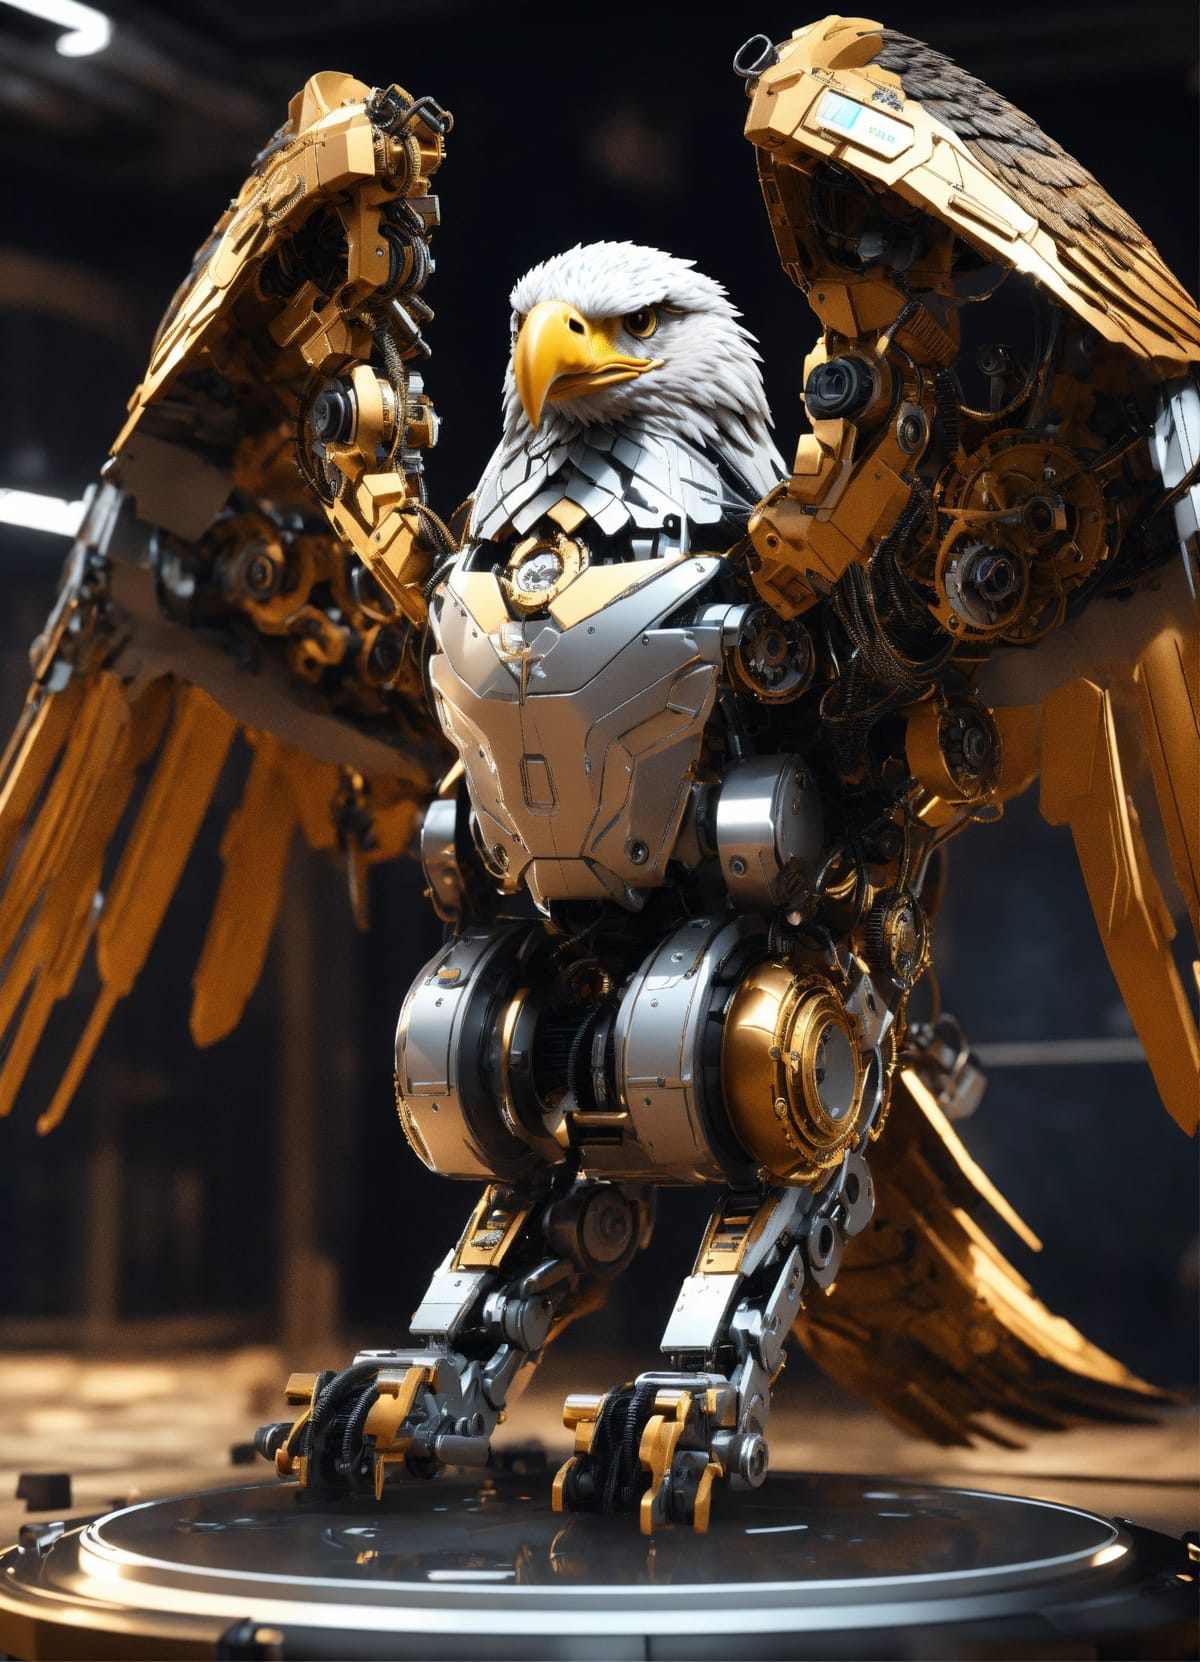 The Eagle: Let the Horror Begin